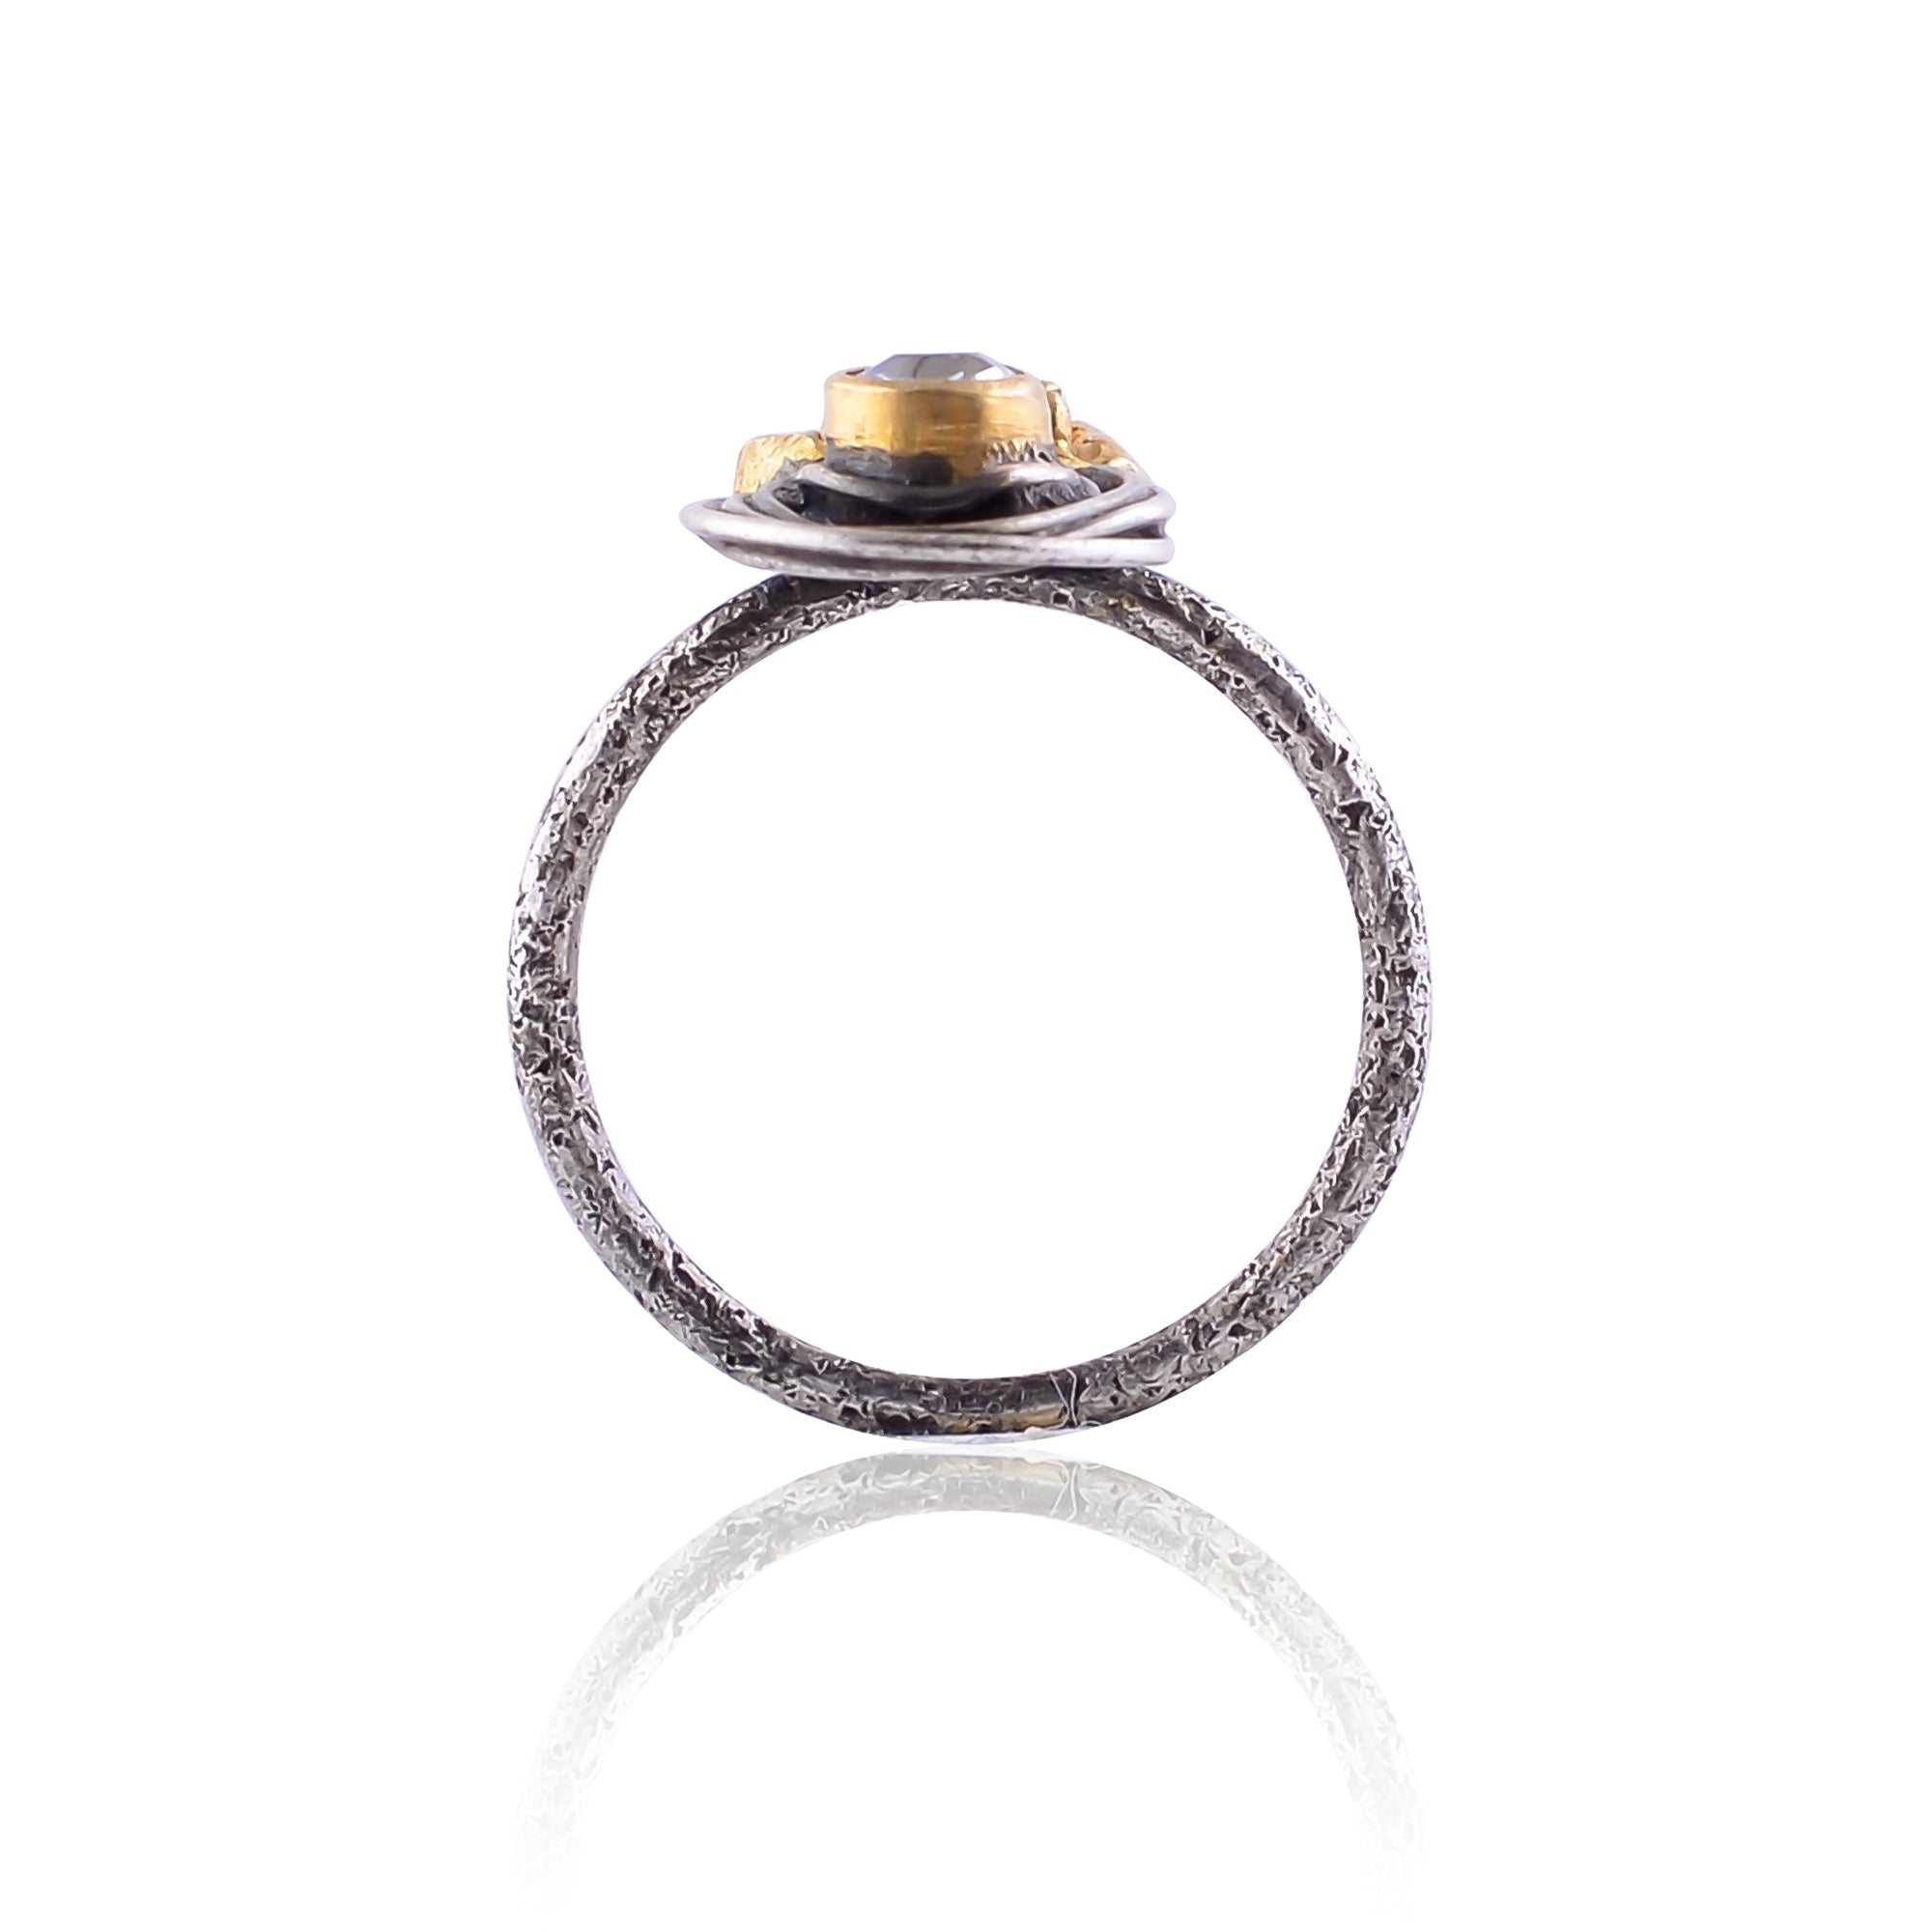 Buy Handmade Silver Gold Black Plated Blue Topaz/tourmaline Ring